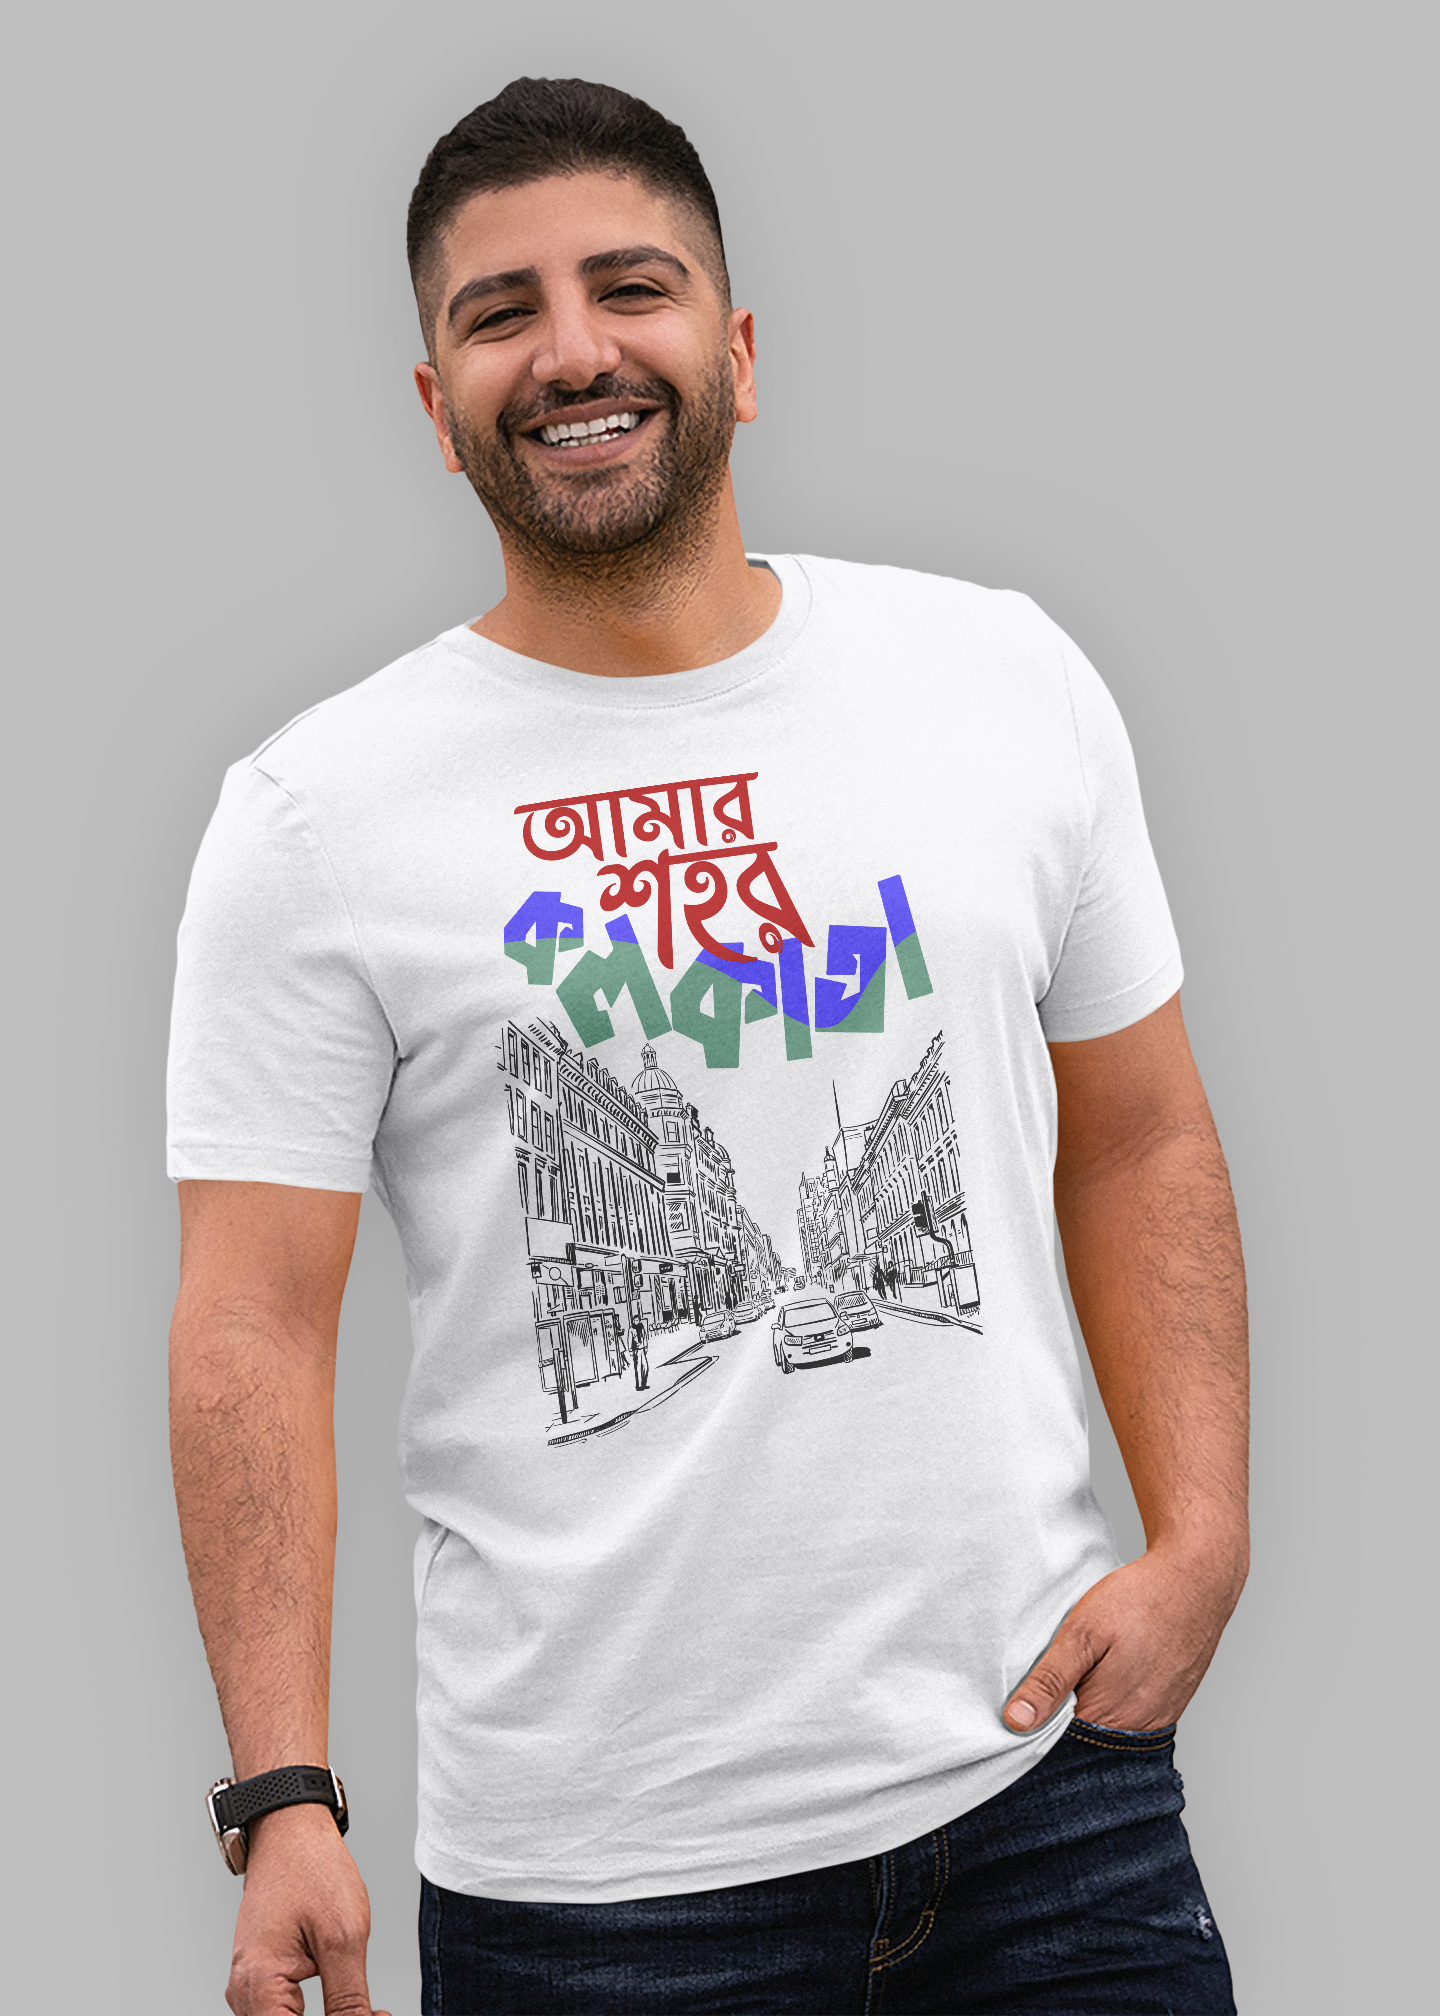 Amar sohor kolkata Bengali Printed Half Sleeve Premium Cotton T-shirt For Men